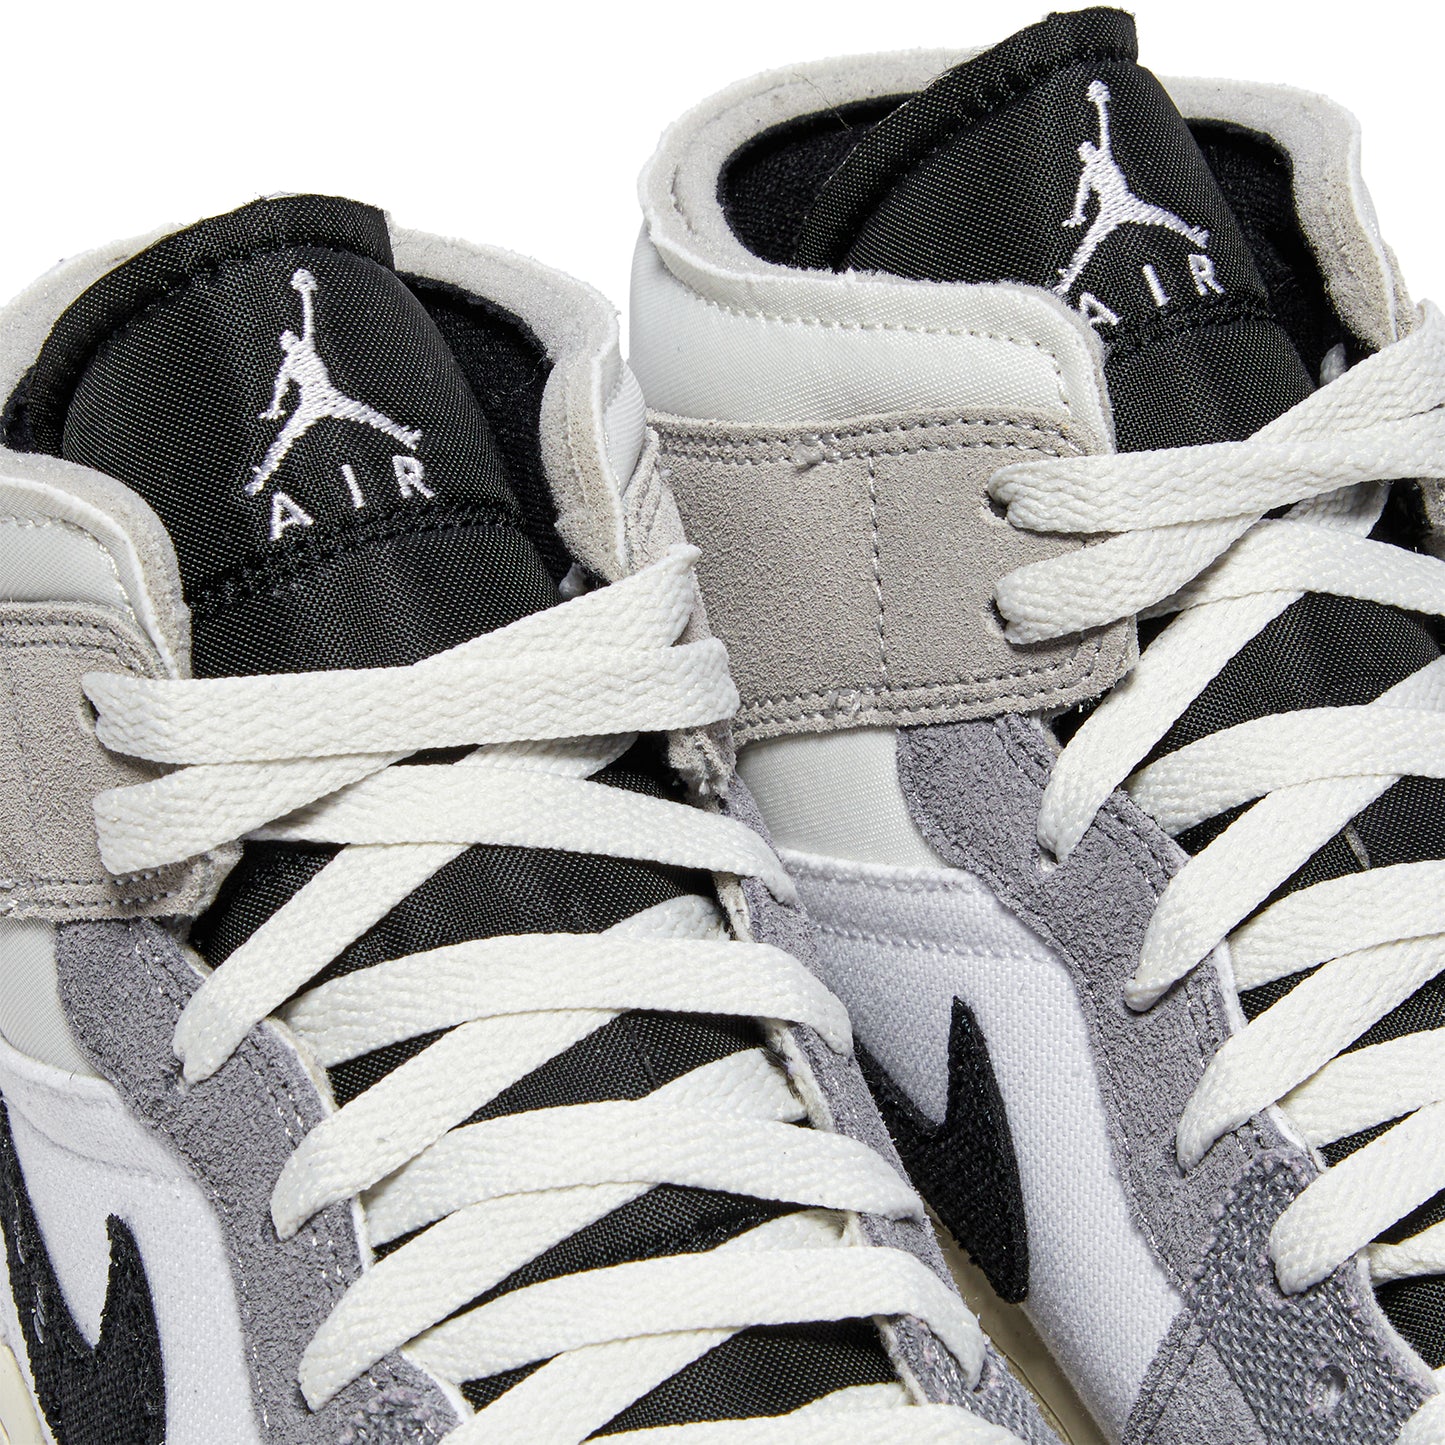 Nike Air Jordan 1 Mid SE Craft (Cement Grey/Black/White/Tech Grey)